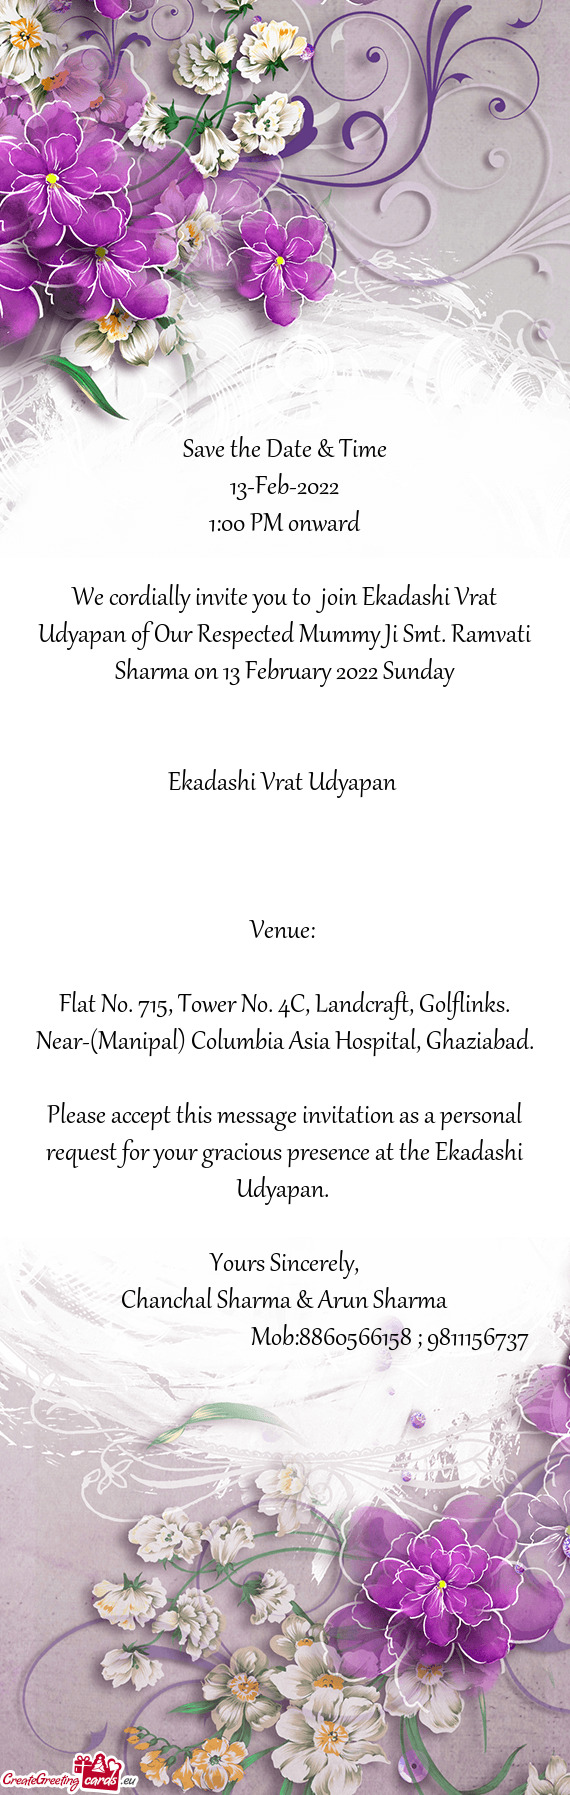 We cordially invite you to join Ekadashi Vrat Udyapan of Our Respected Mummy Ji Smt. Ramvati Sharma